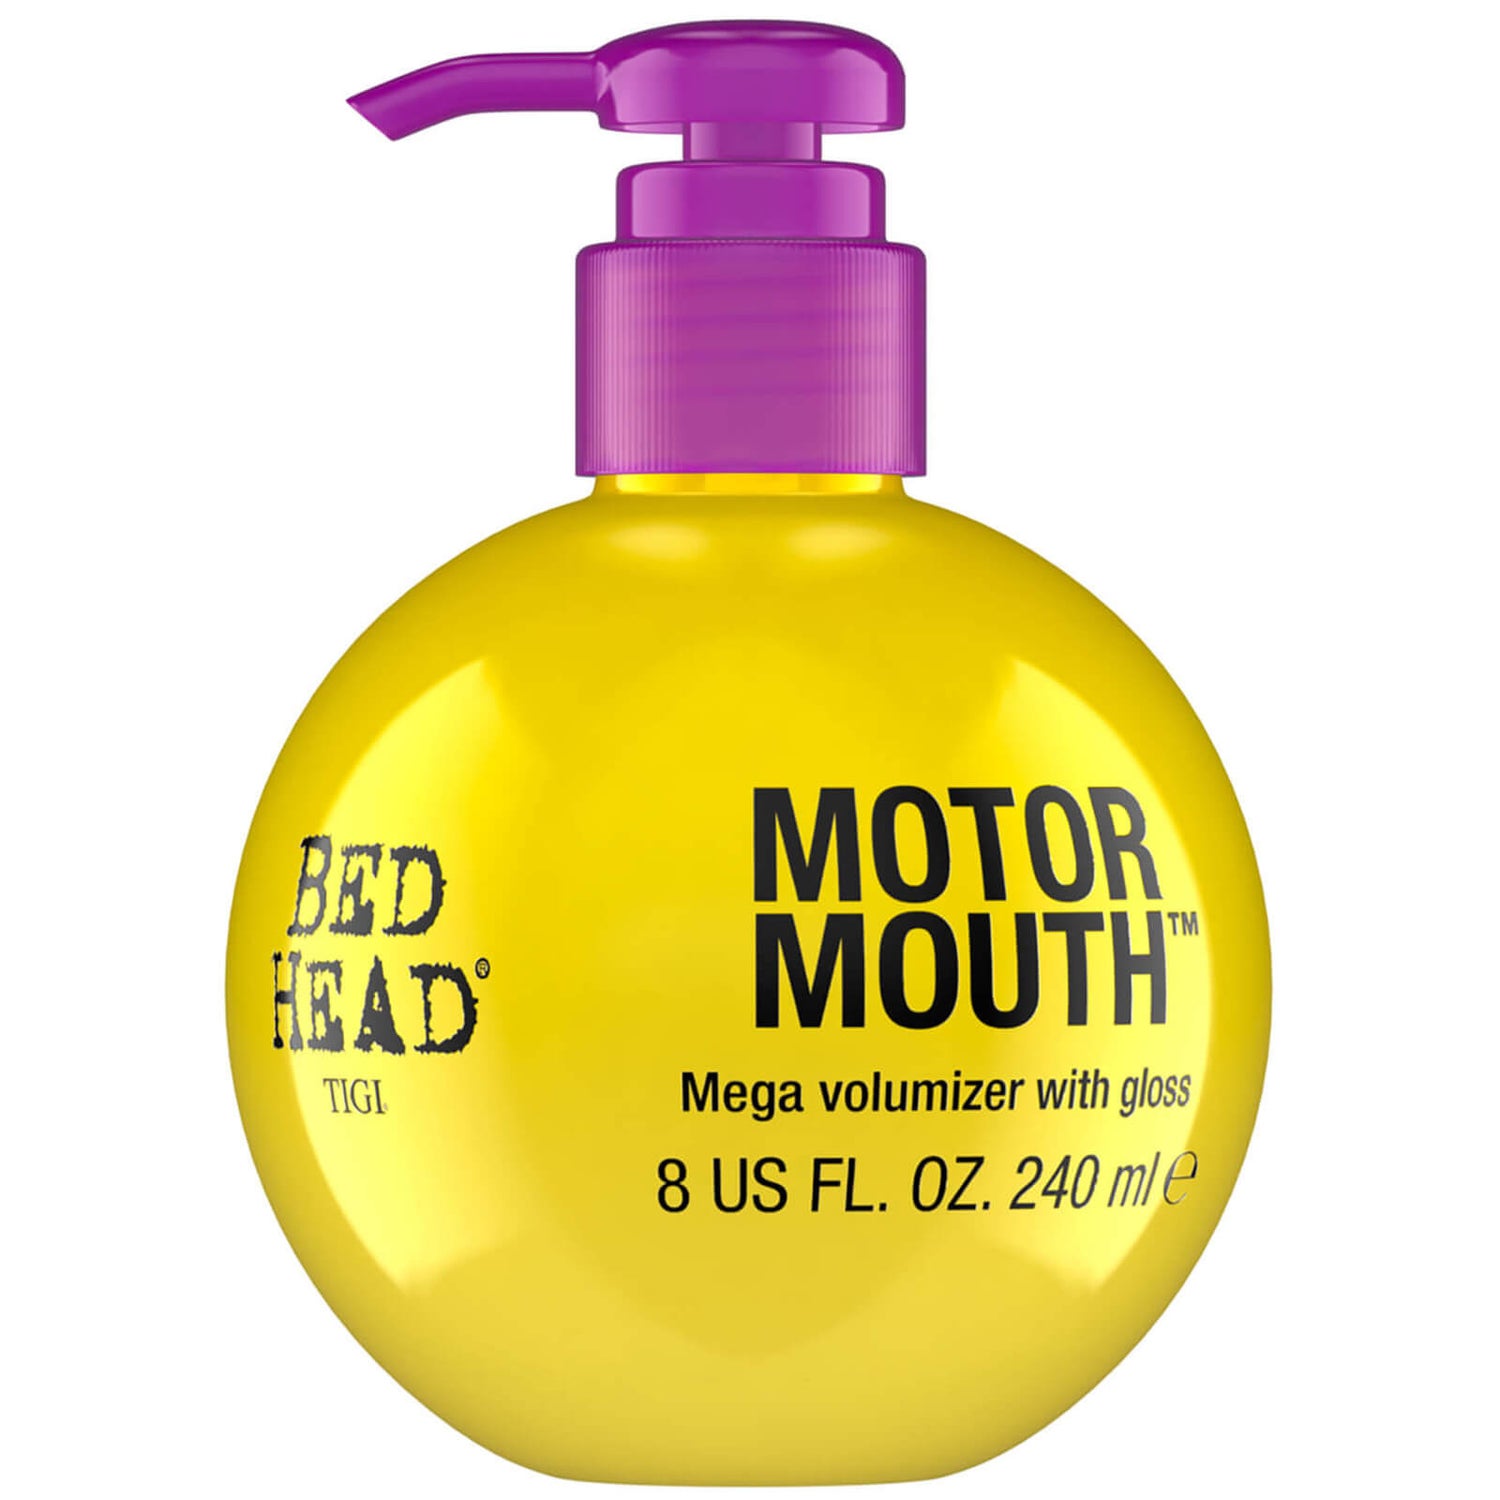 TIGI Bed Head Motor Mouth mousse coiffante densifiante (240ml)